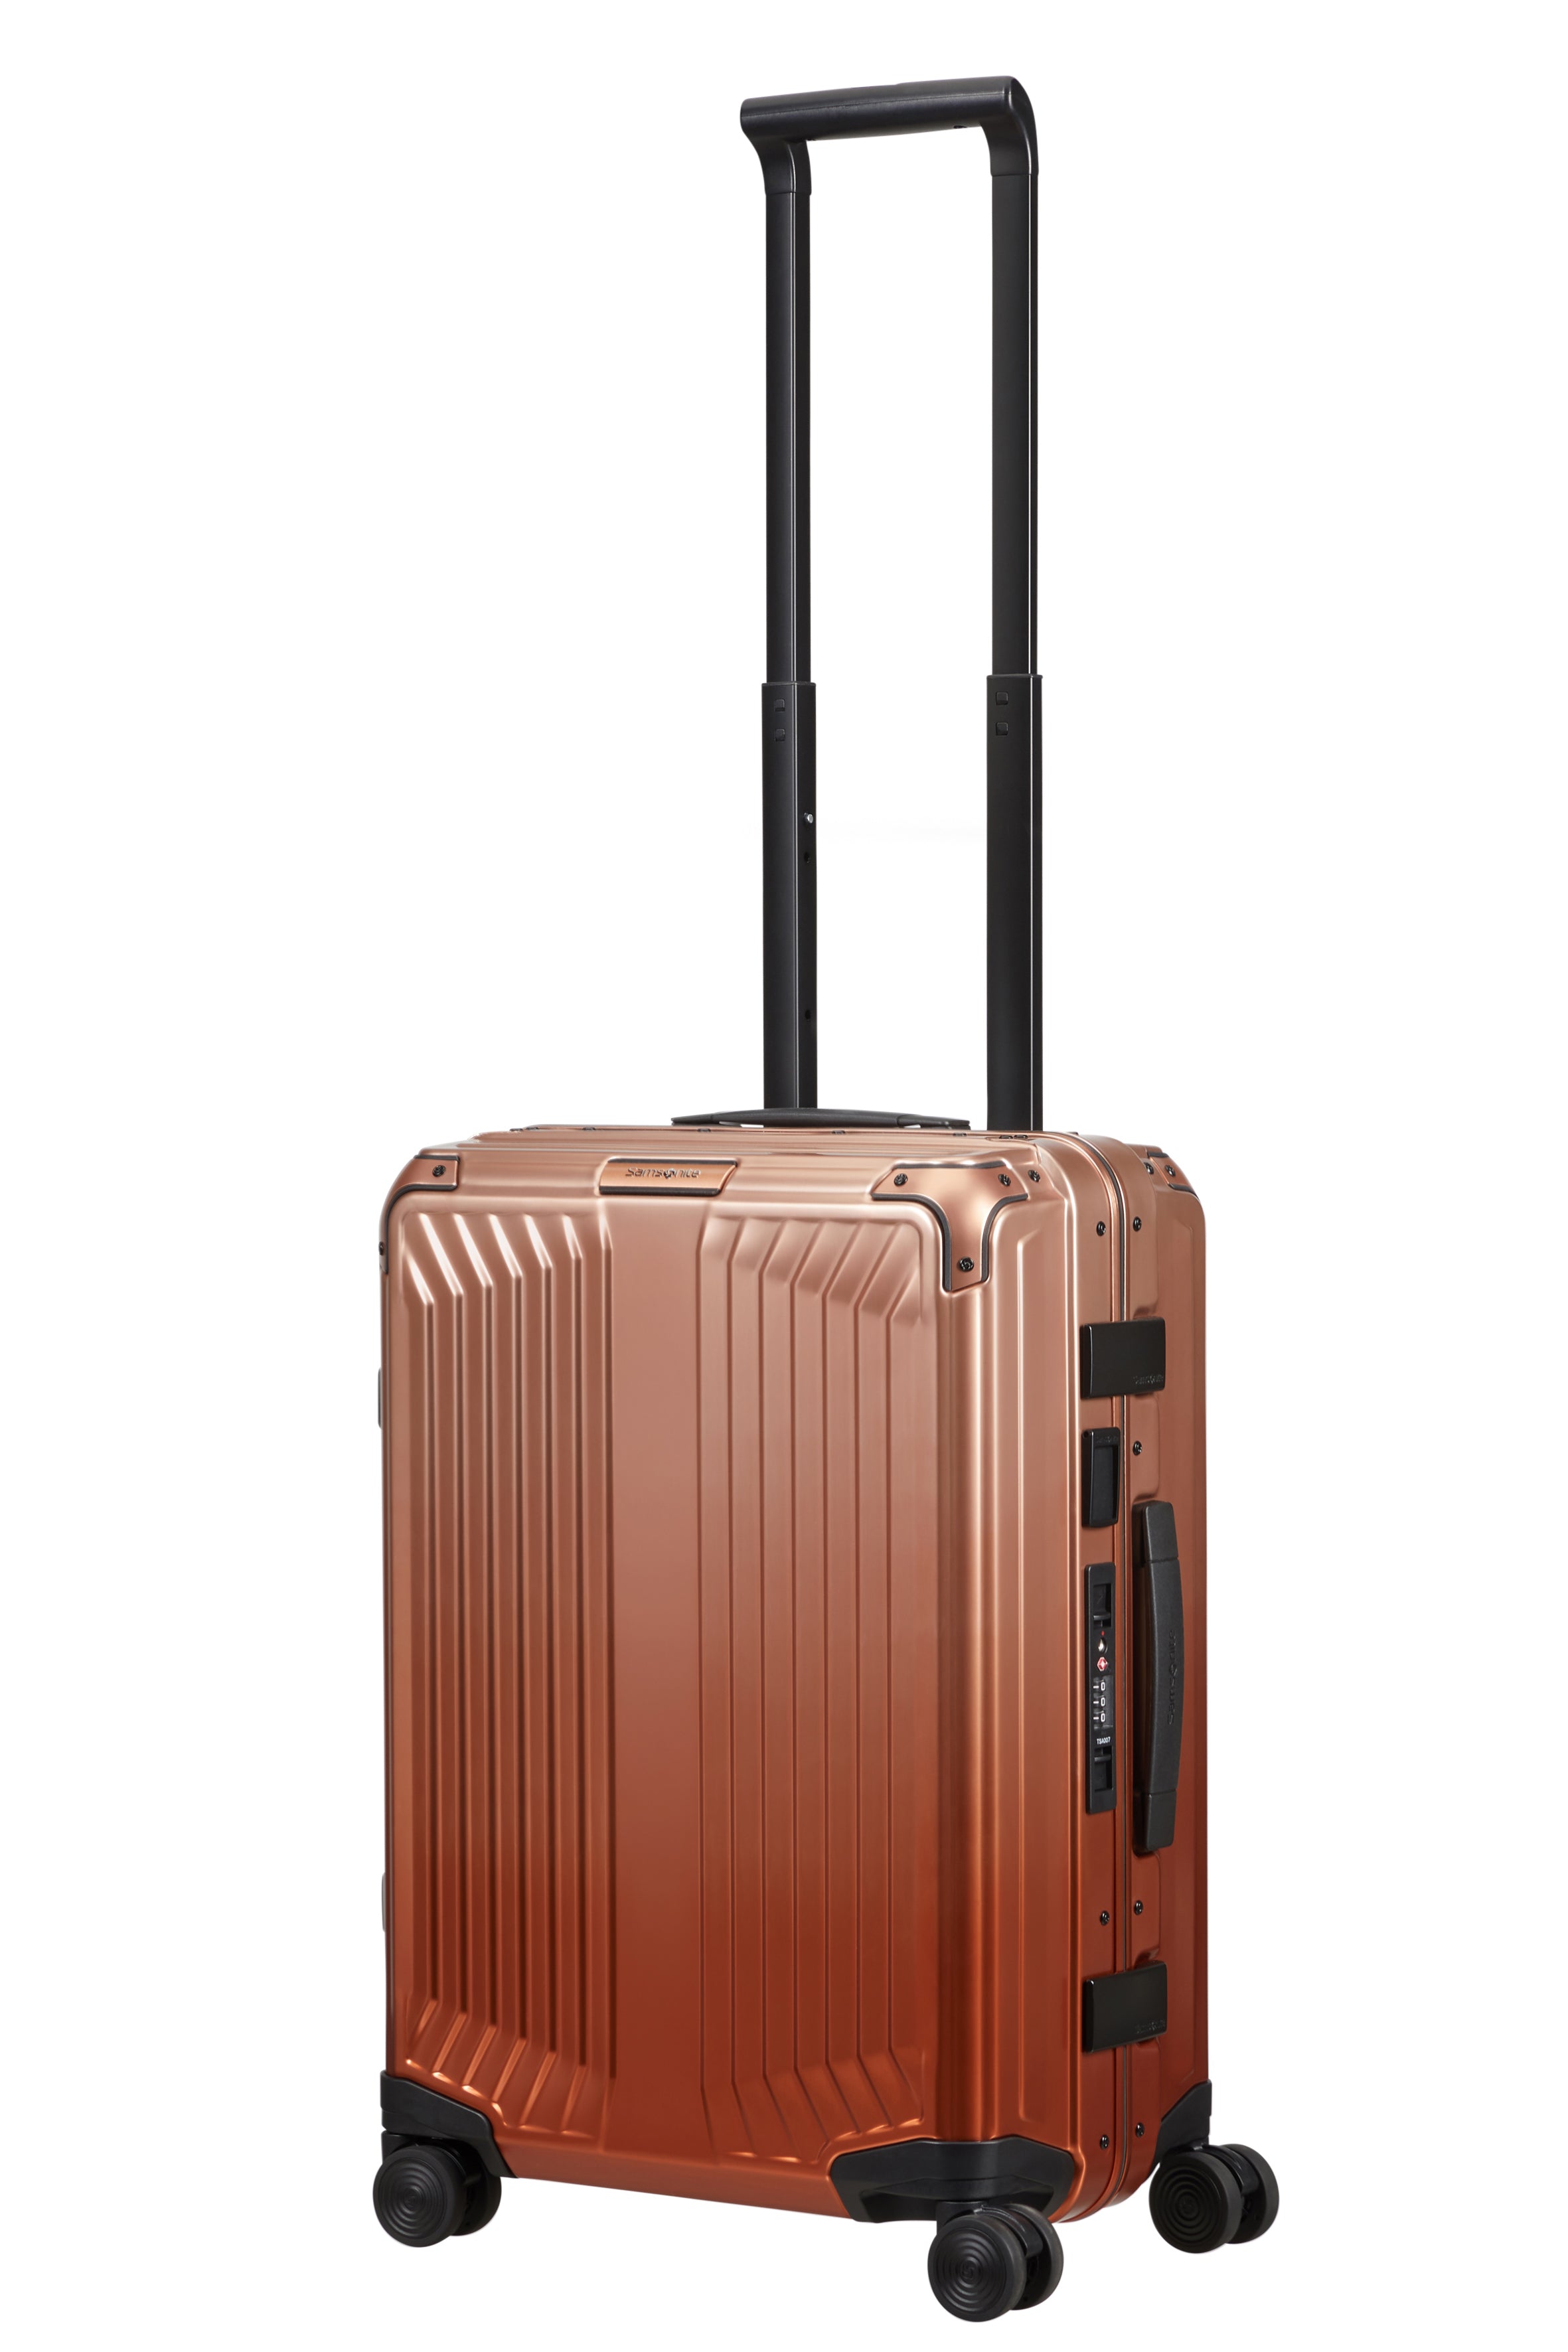 Samsonite - Lite Box ALU 55cm Small 4 Wheel Hard Suitcase - Gradient Copper-8